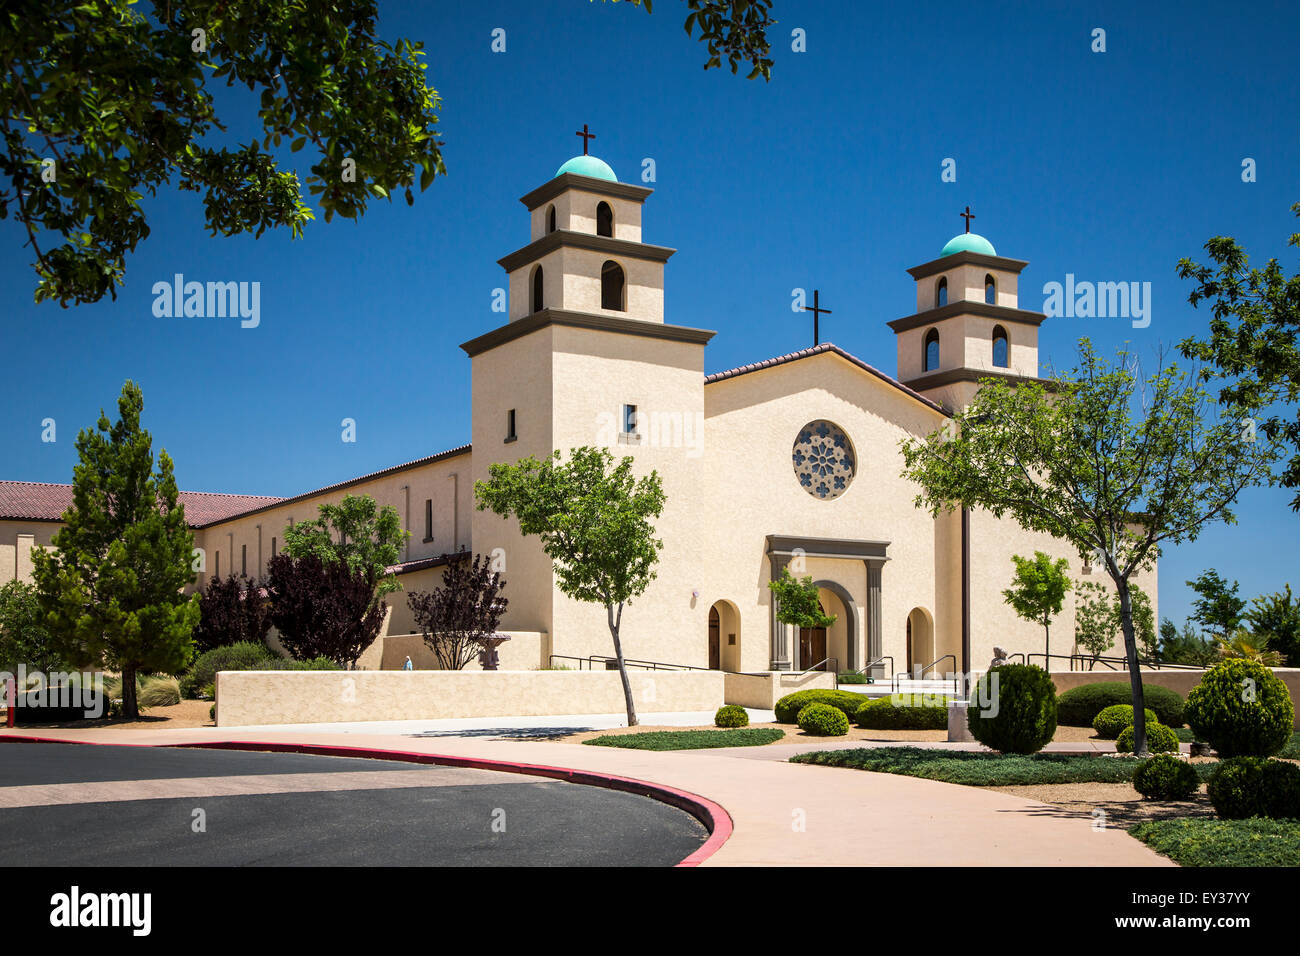 The exterior facade of the Immaculate Conception Church near Cottonwood, Arizona, USA. Stock Photo